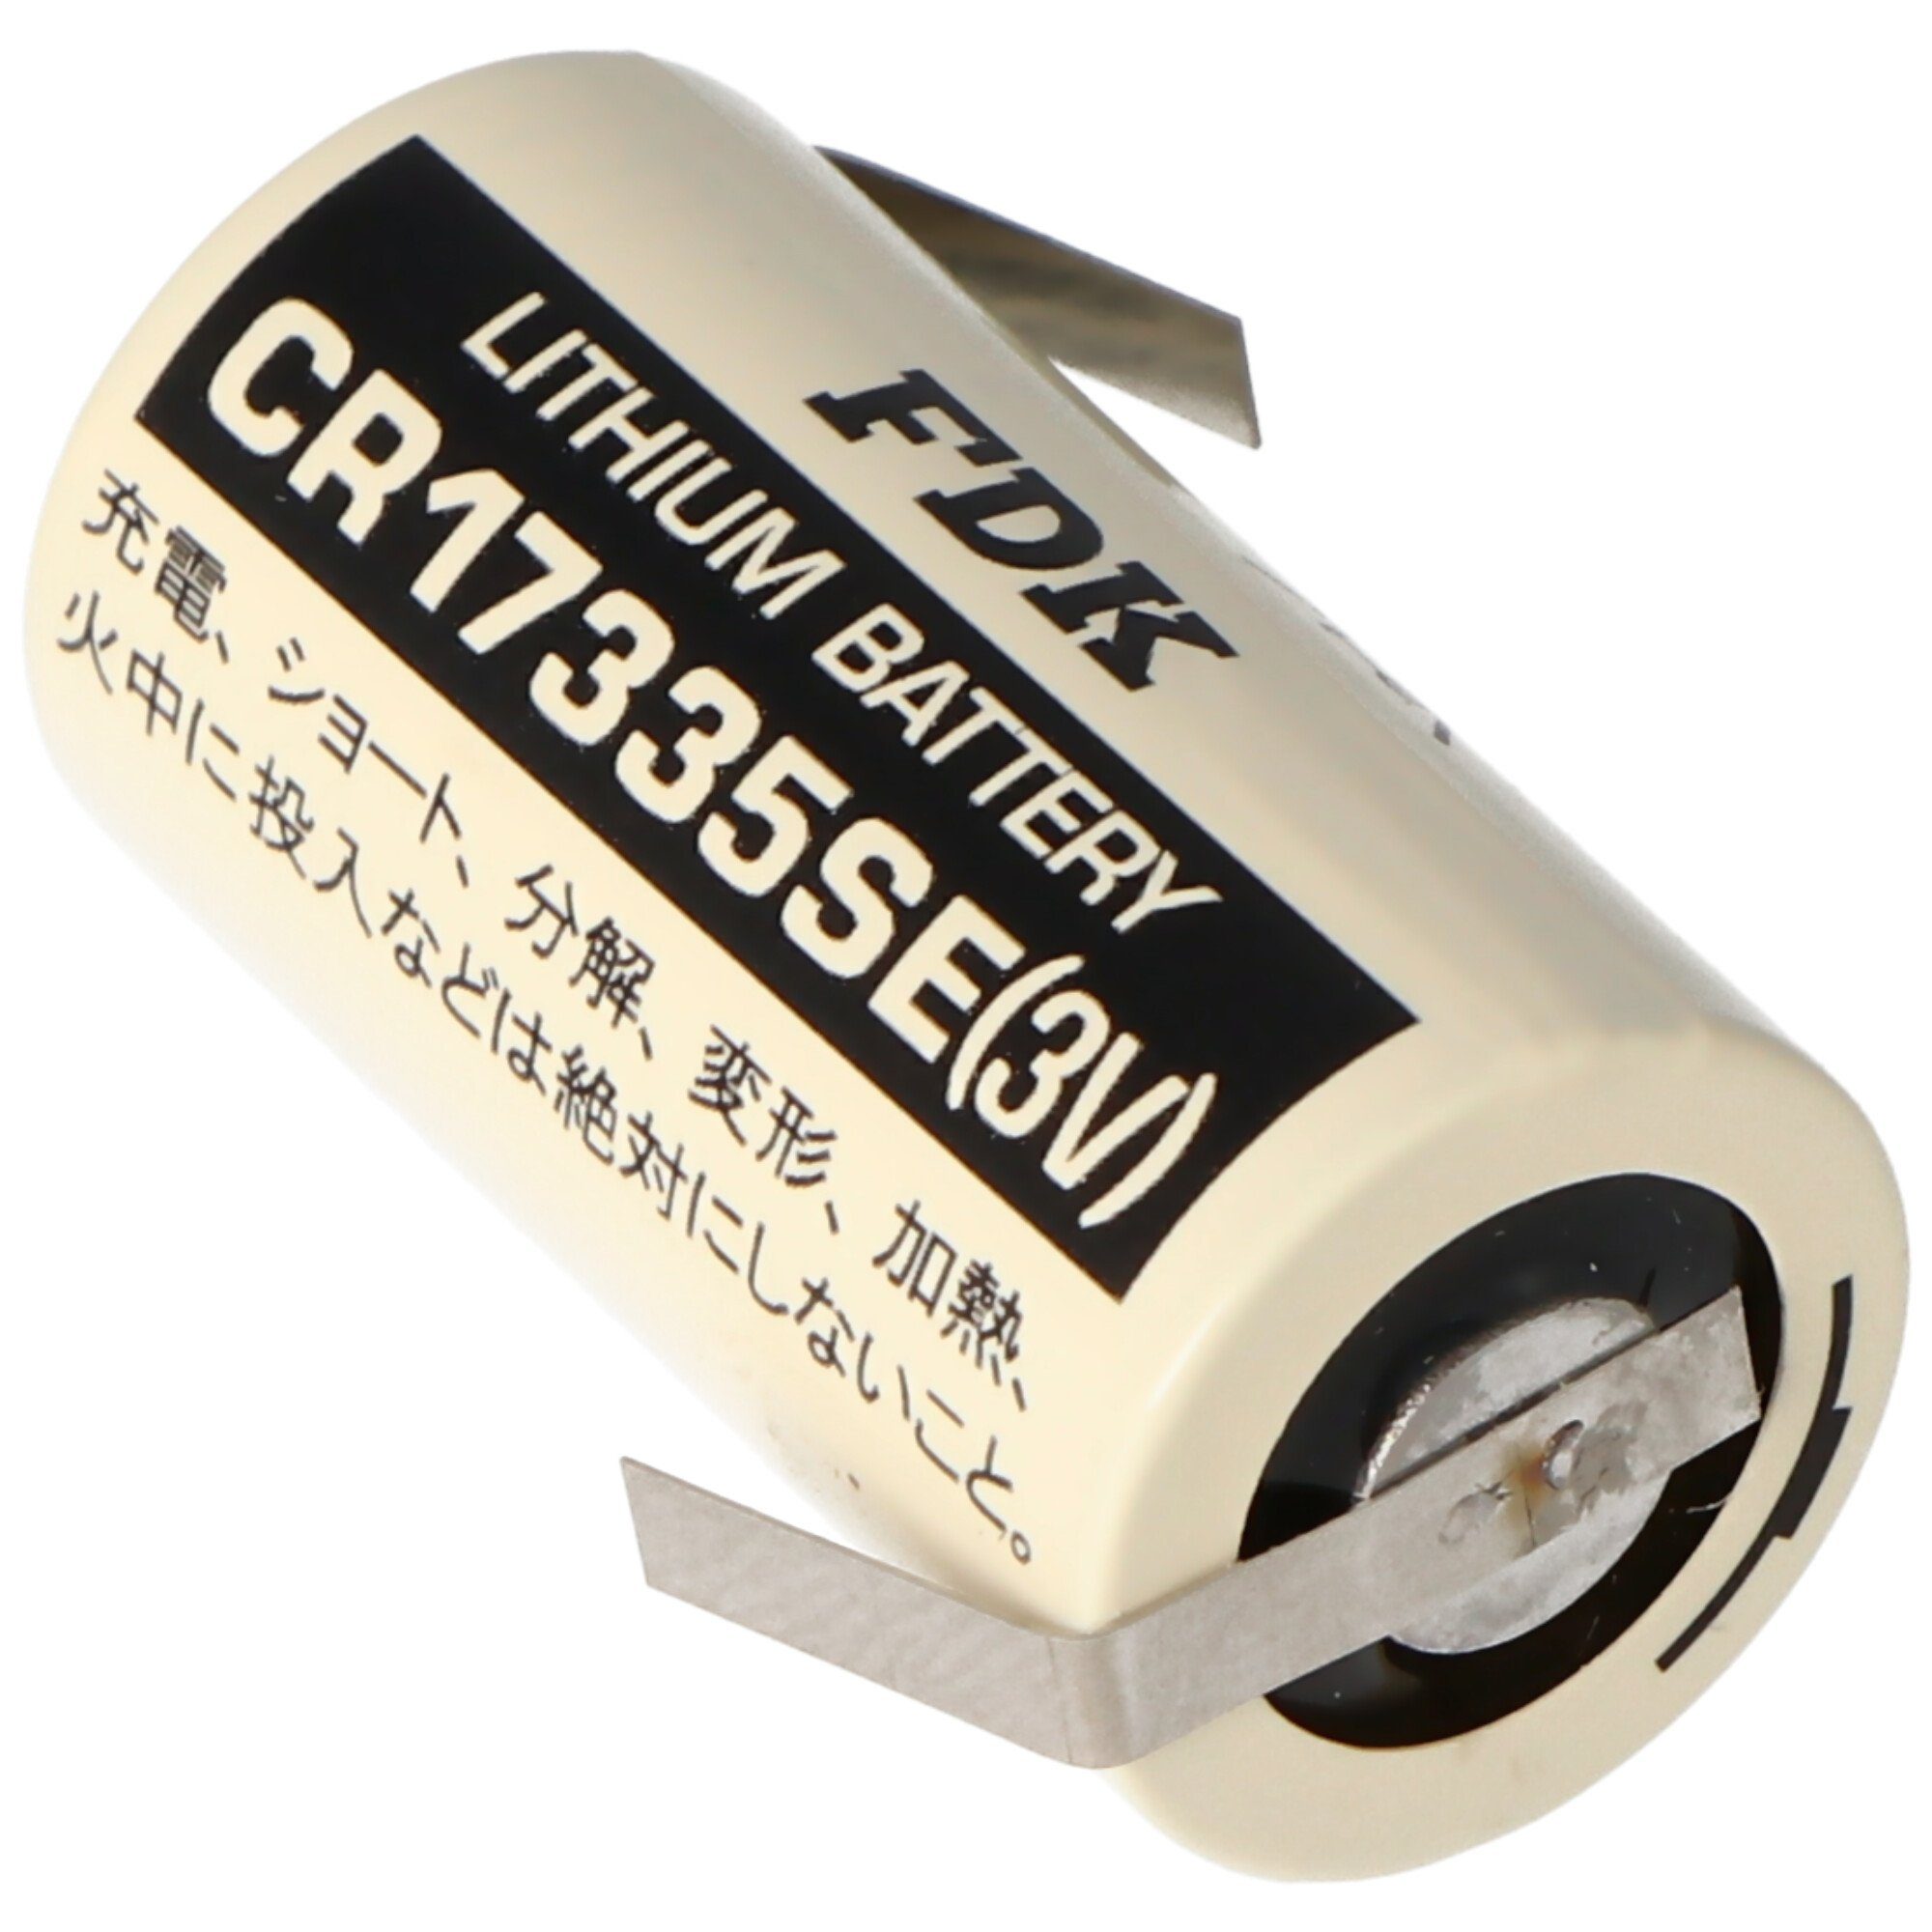 Sanyo Sanyo Size Batterie 2/3A, Lithium SE mit CR17335 Lötfahne Batterie, (3,0 V) Z-Form